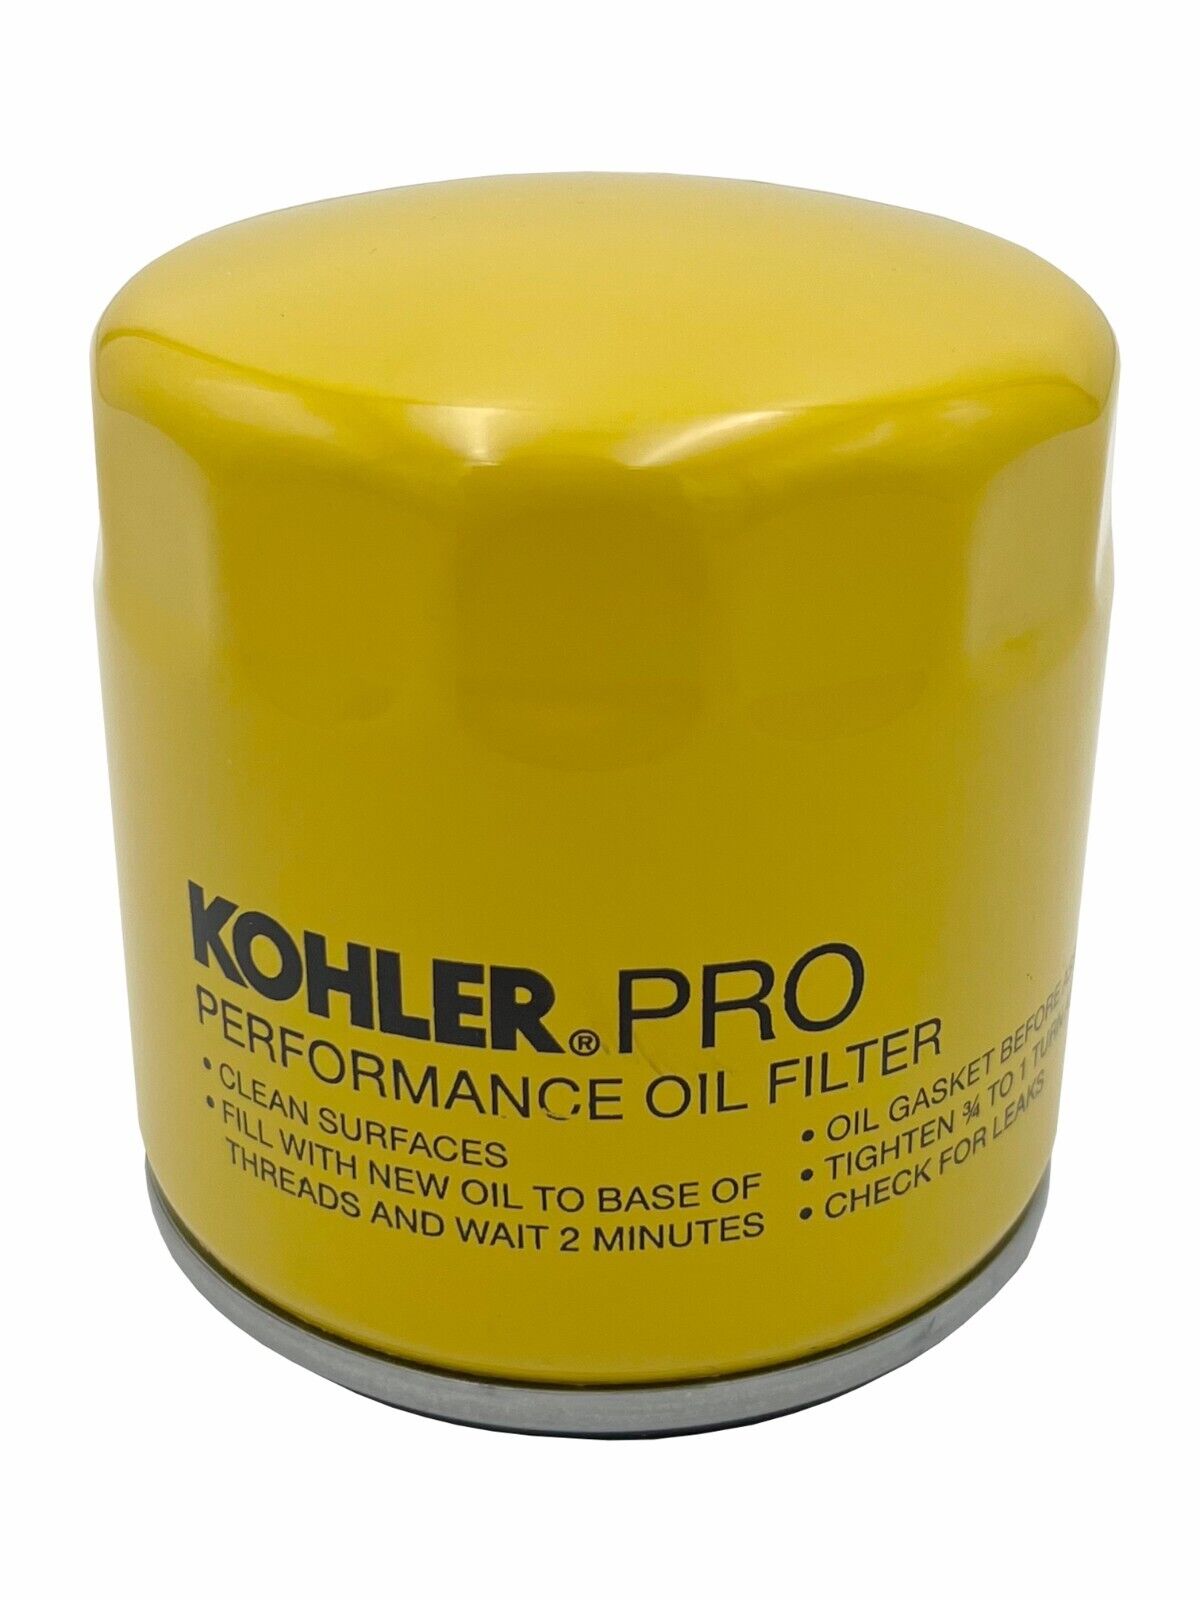 Kohler 52 050 02-S Engine Oil Filter Extra Capacity For CH11 - CH15, CV11 - CV22